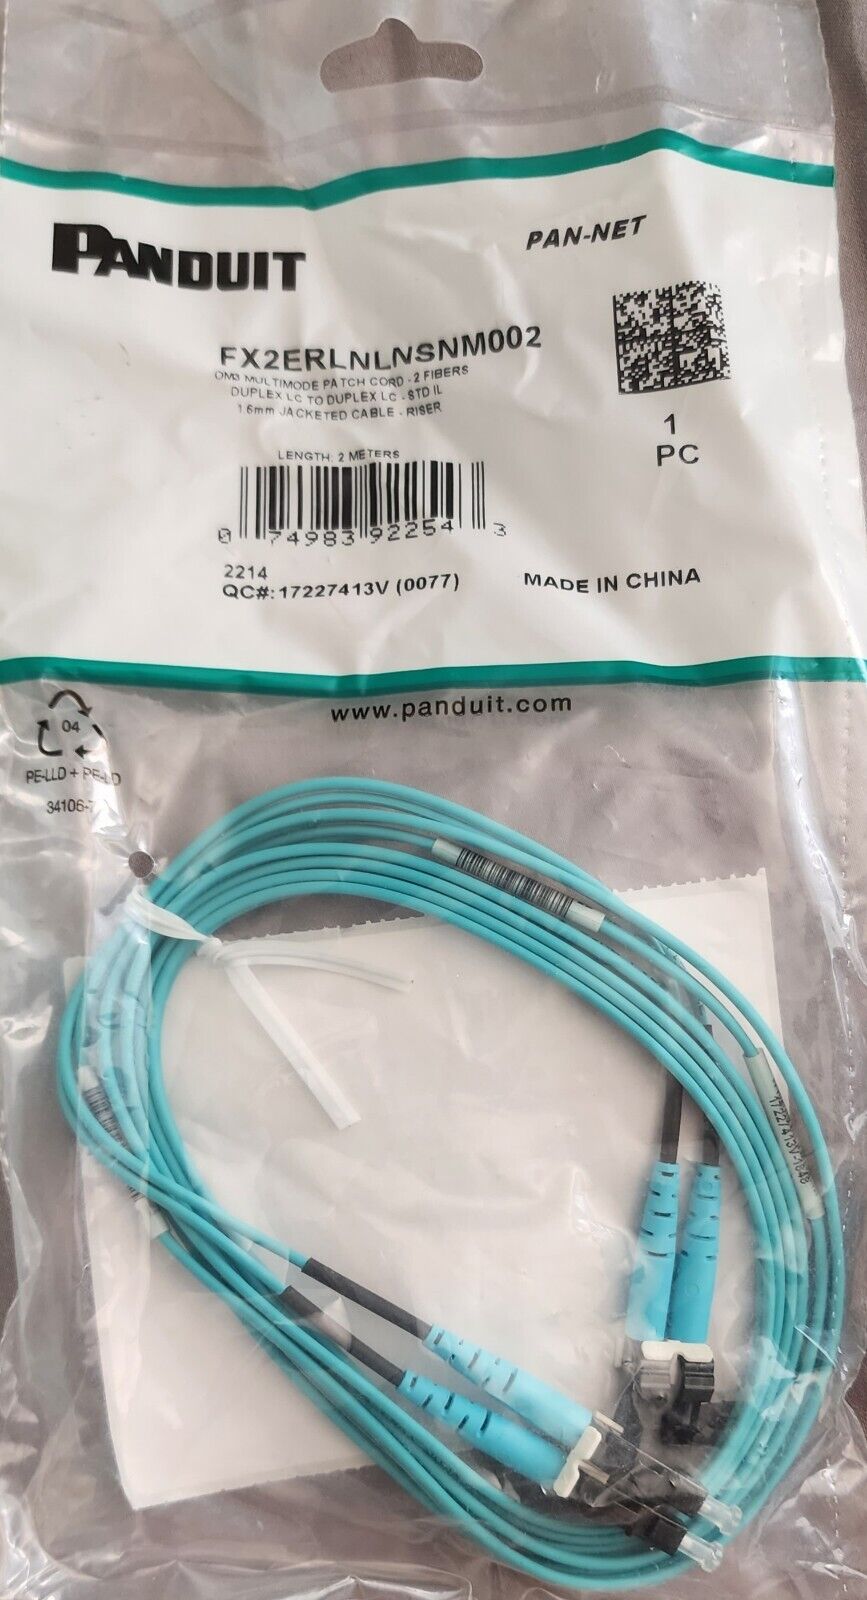 Panduit Fiber Optic Duplex Patch Network Cable FX2ERLNLNSNM002